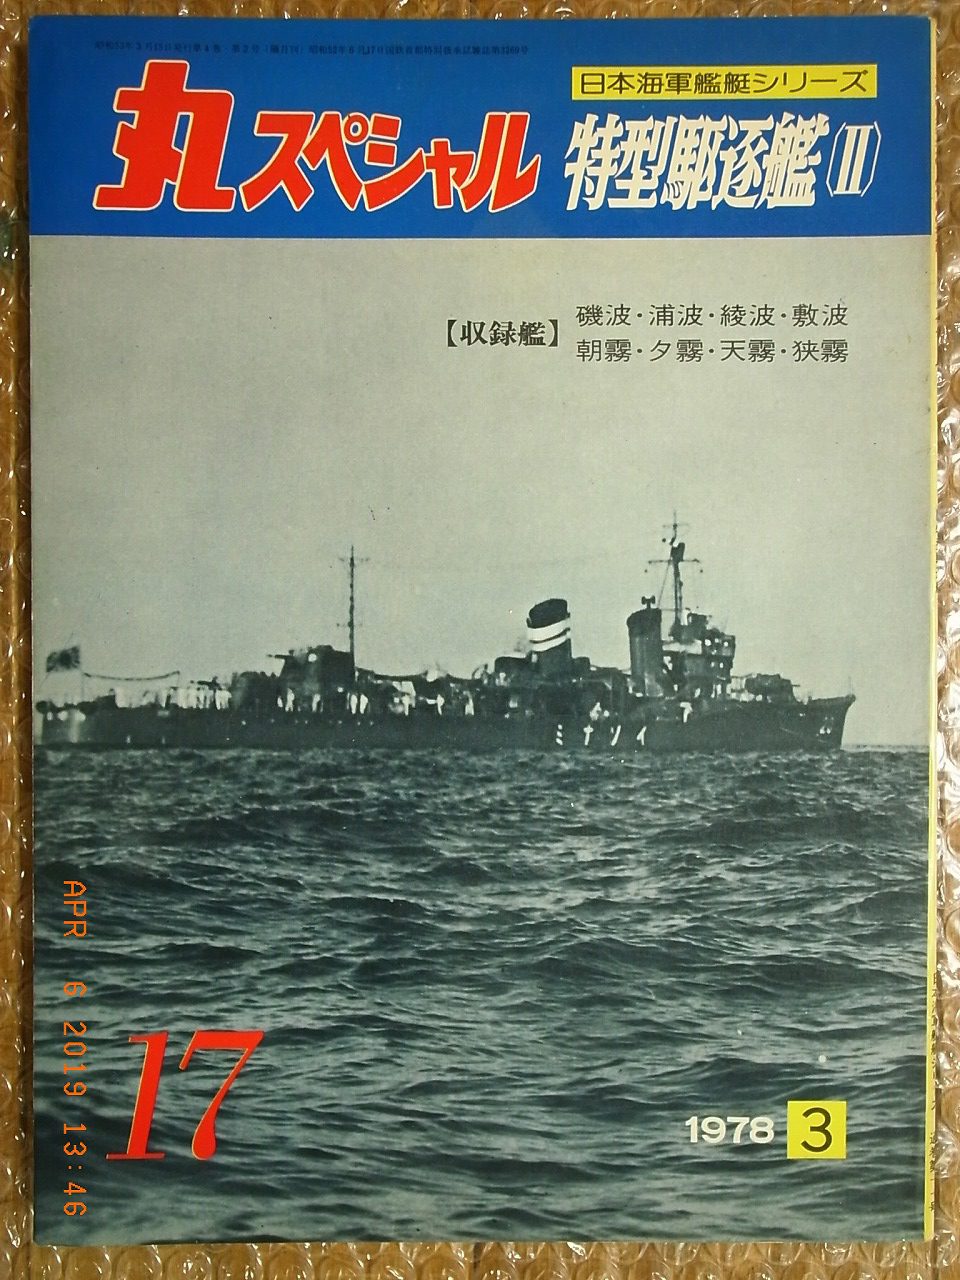 Ijn Special Class Cruisers Ii Pictorial Booklet Maru Special 17 Rarebooksjapan Com